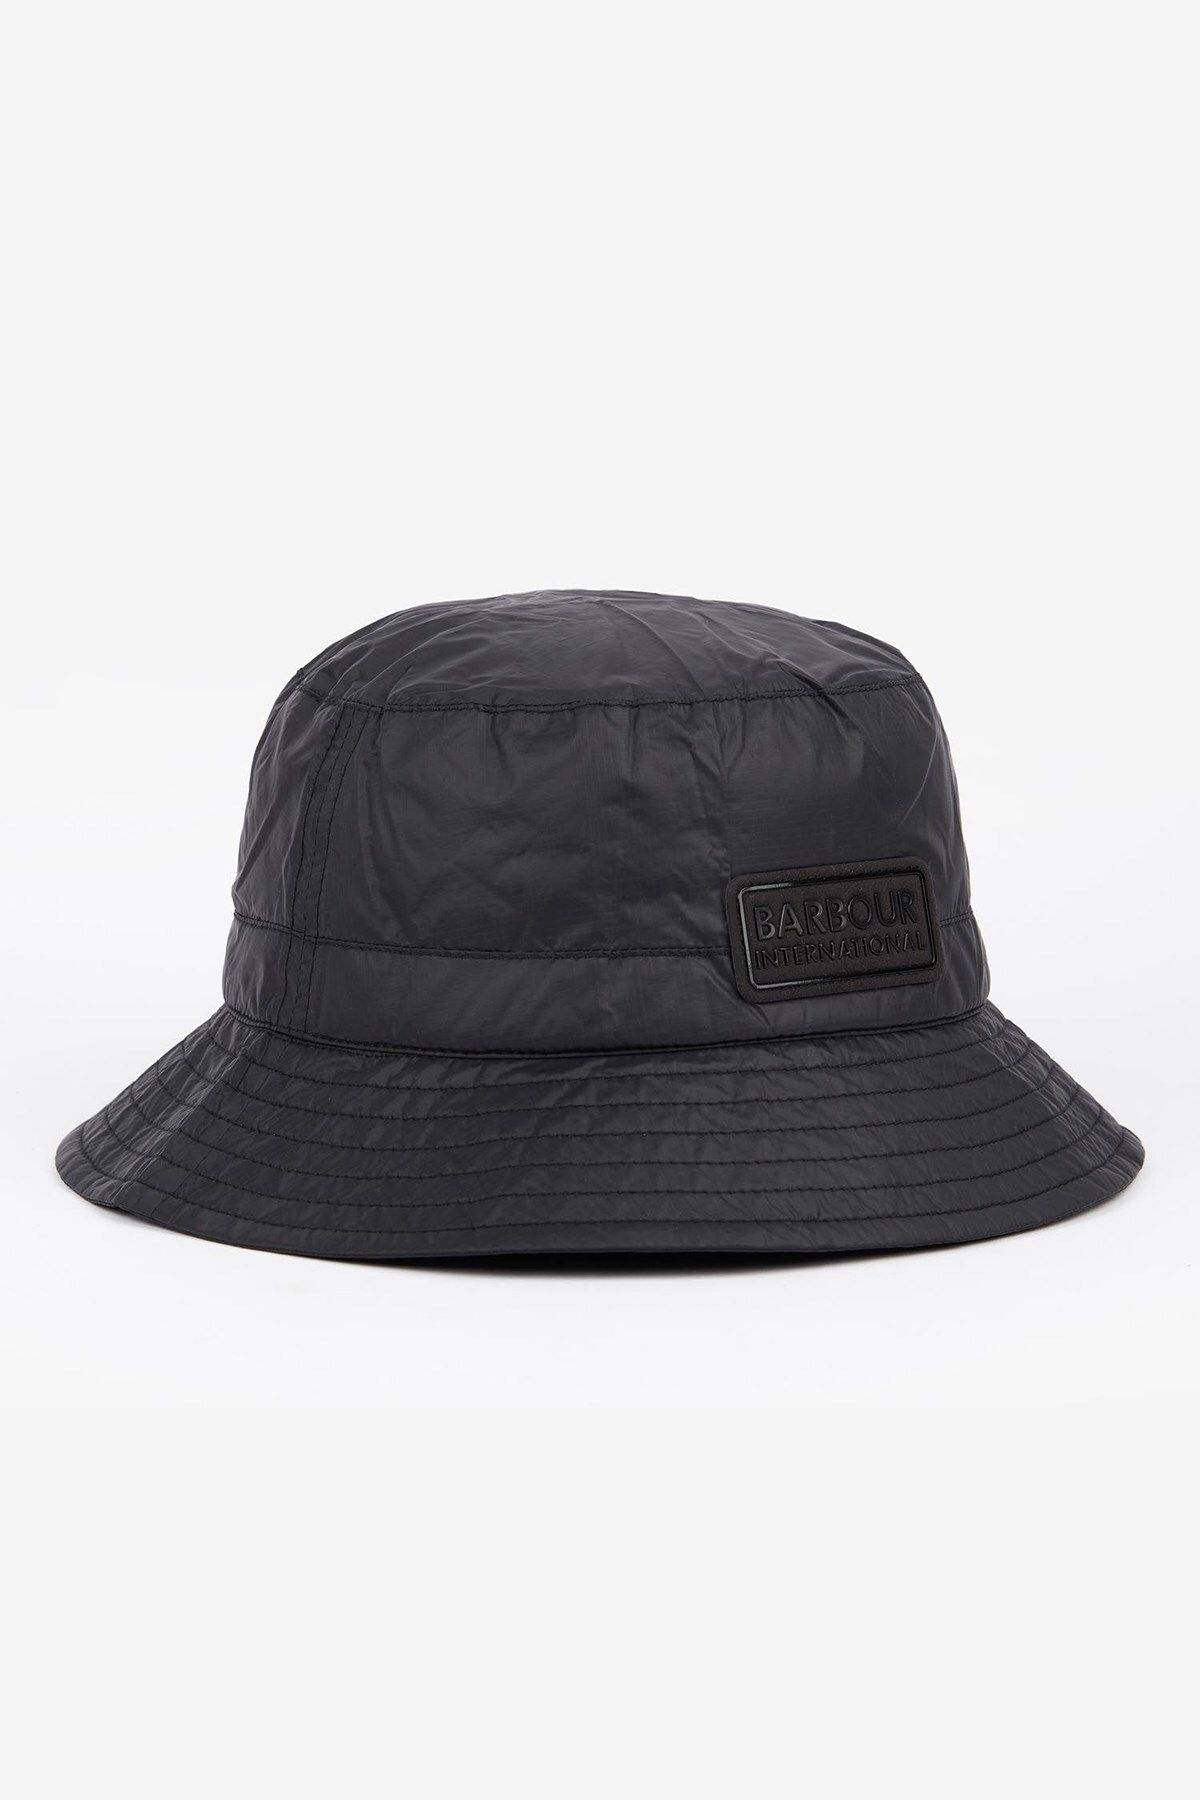 Barbour B.intl Metric Sports Hat BK11 Black